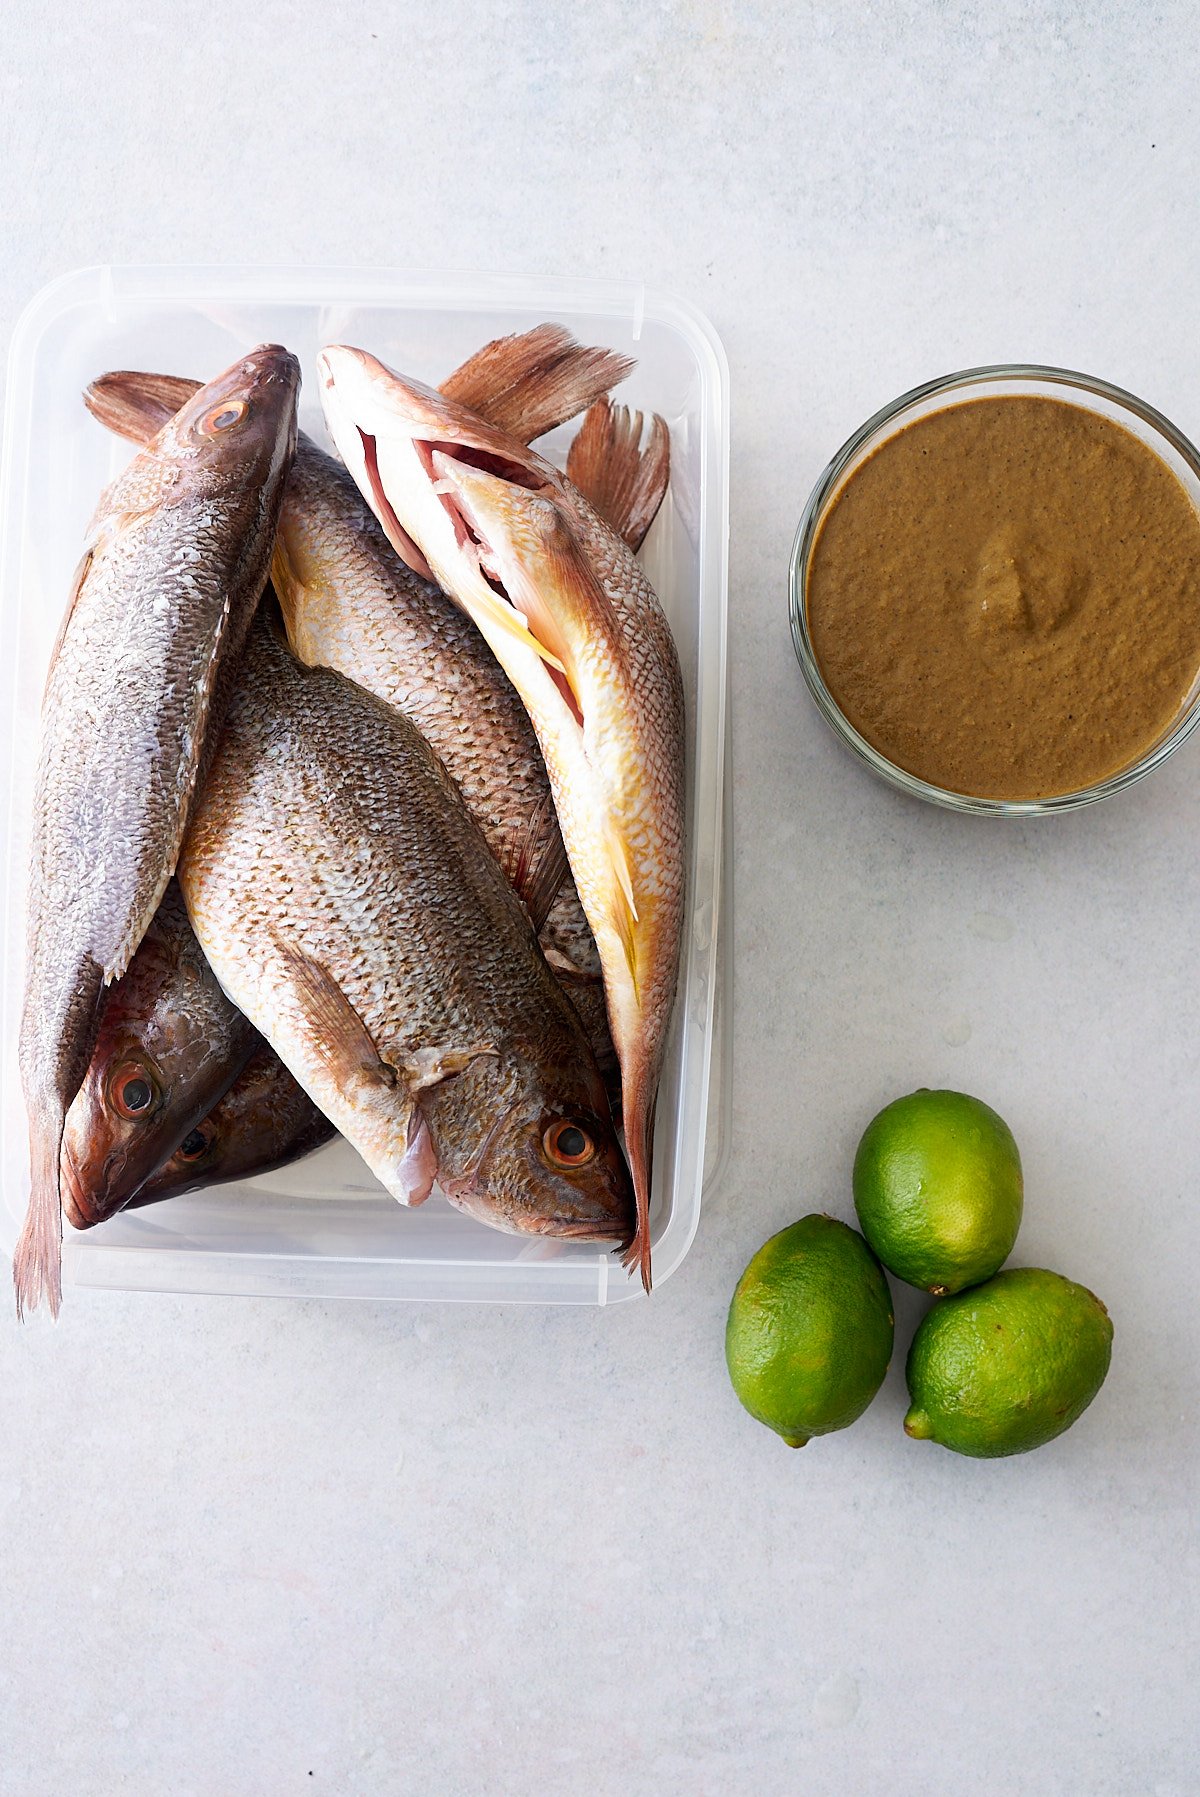 Jamaican jerk fish recipe ingredients.